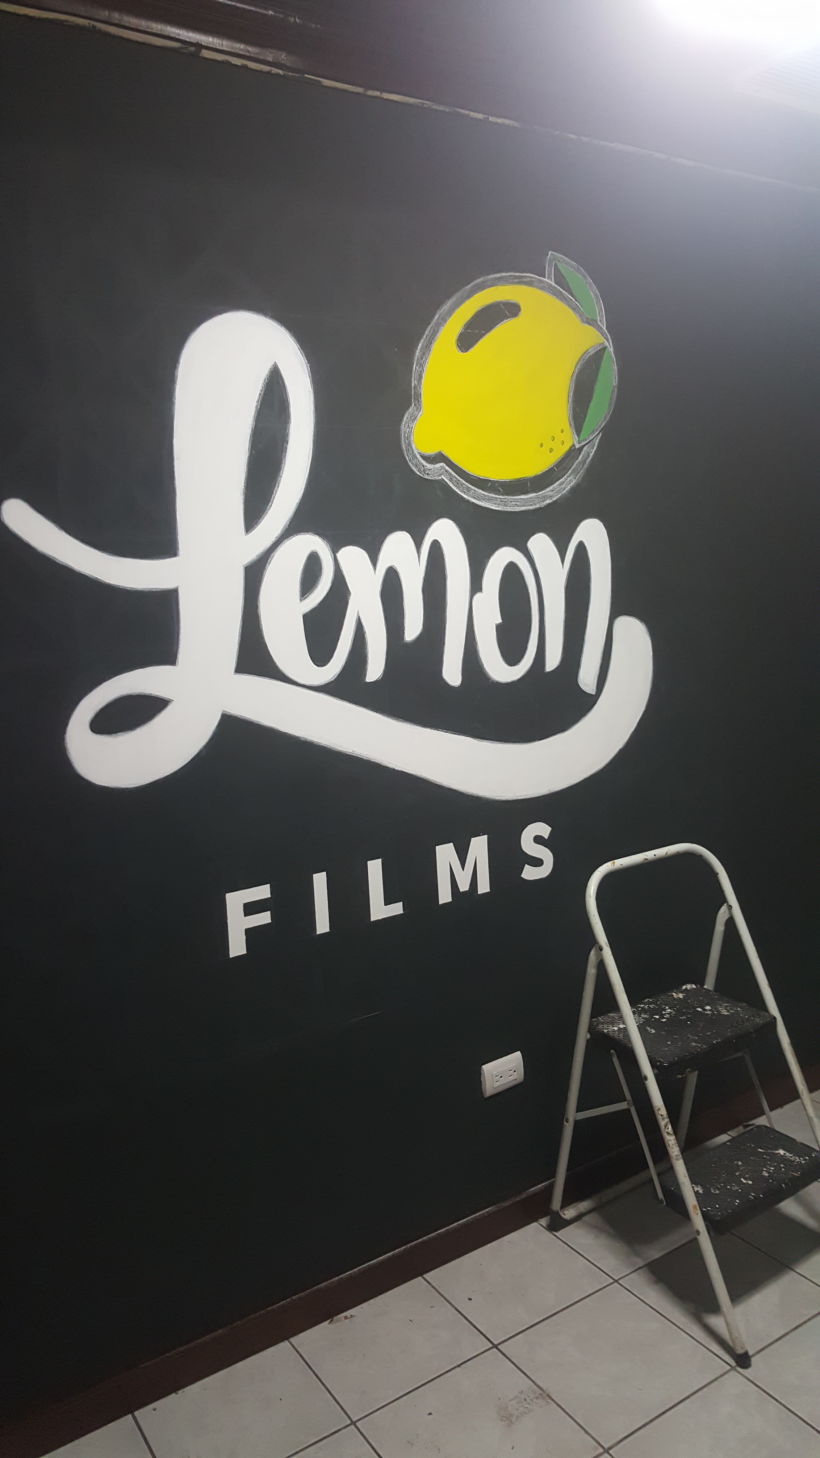  Lettering de gran formato/ Proyecto personal (Lemon Films) 12